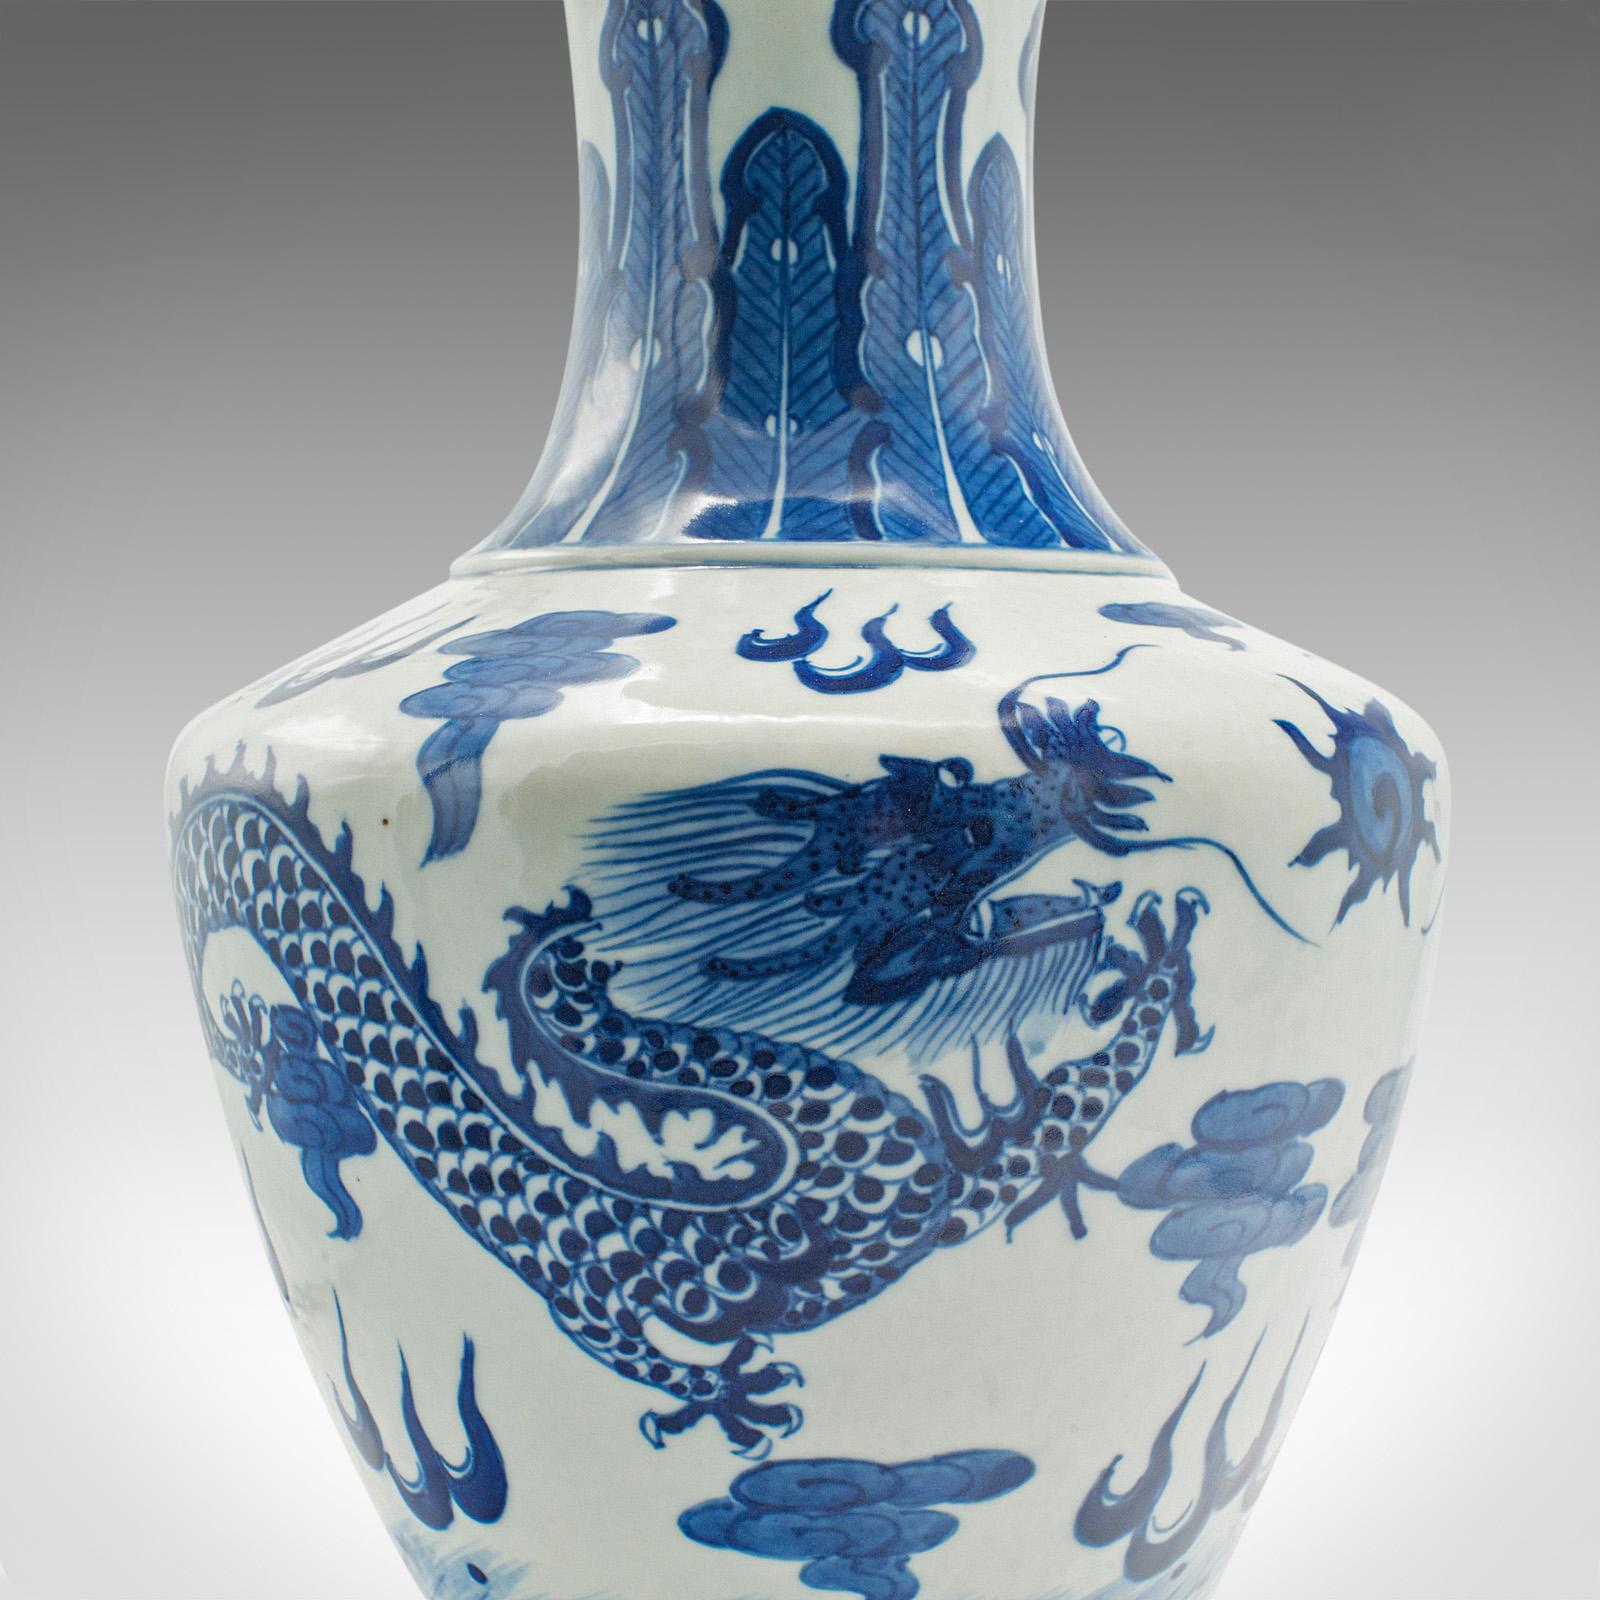 Large Vintage White and Blue Vase, Chinese, Ceramic, Decor, Flower Baluster For Sale 3